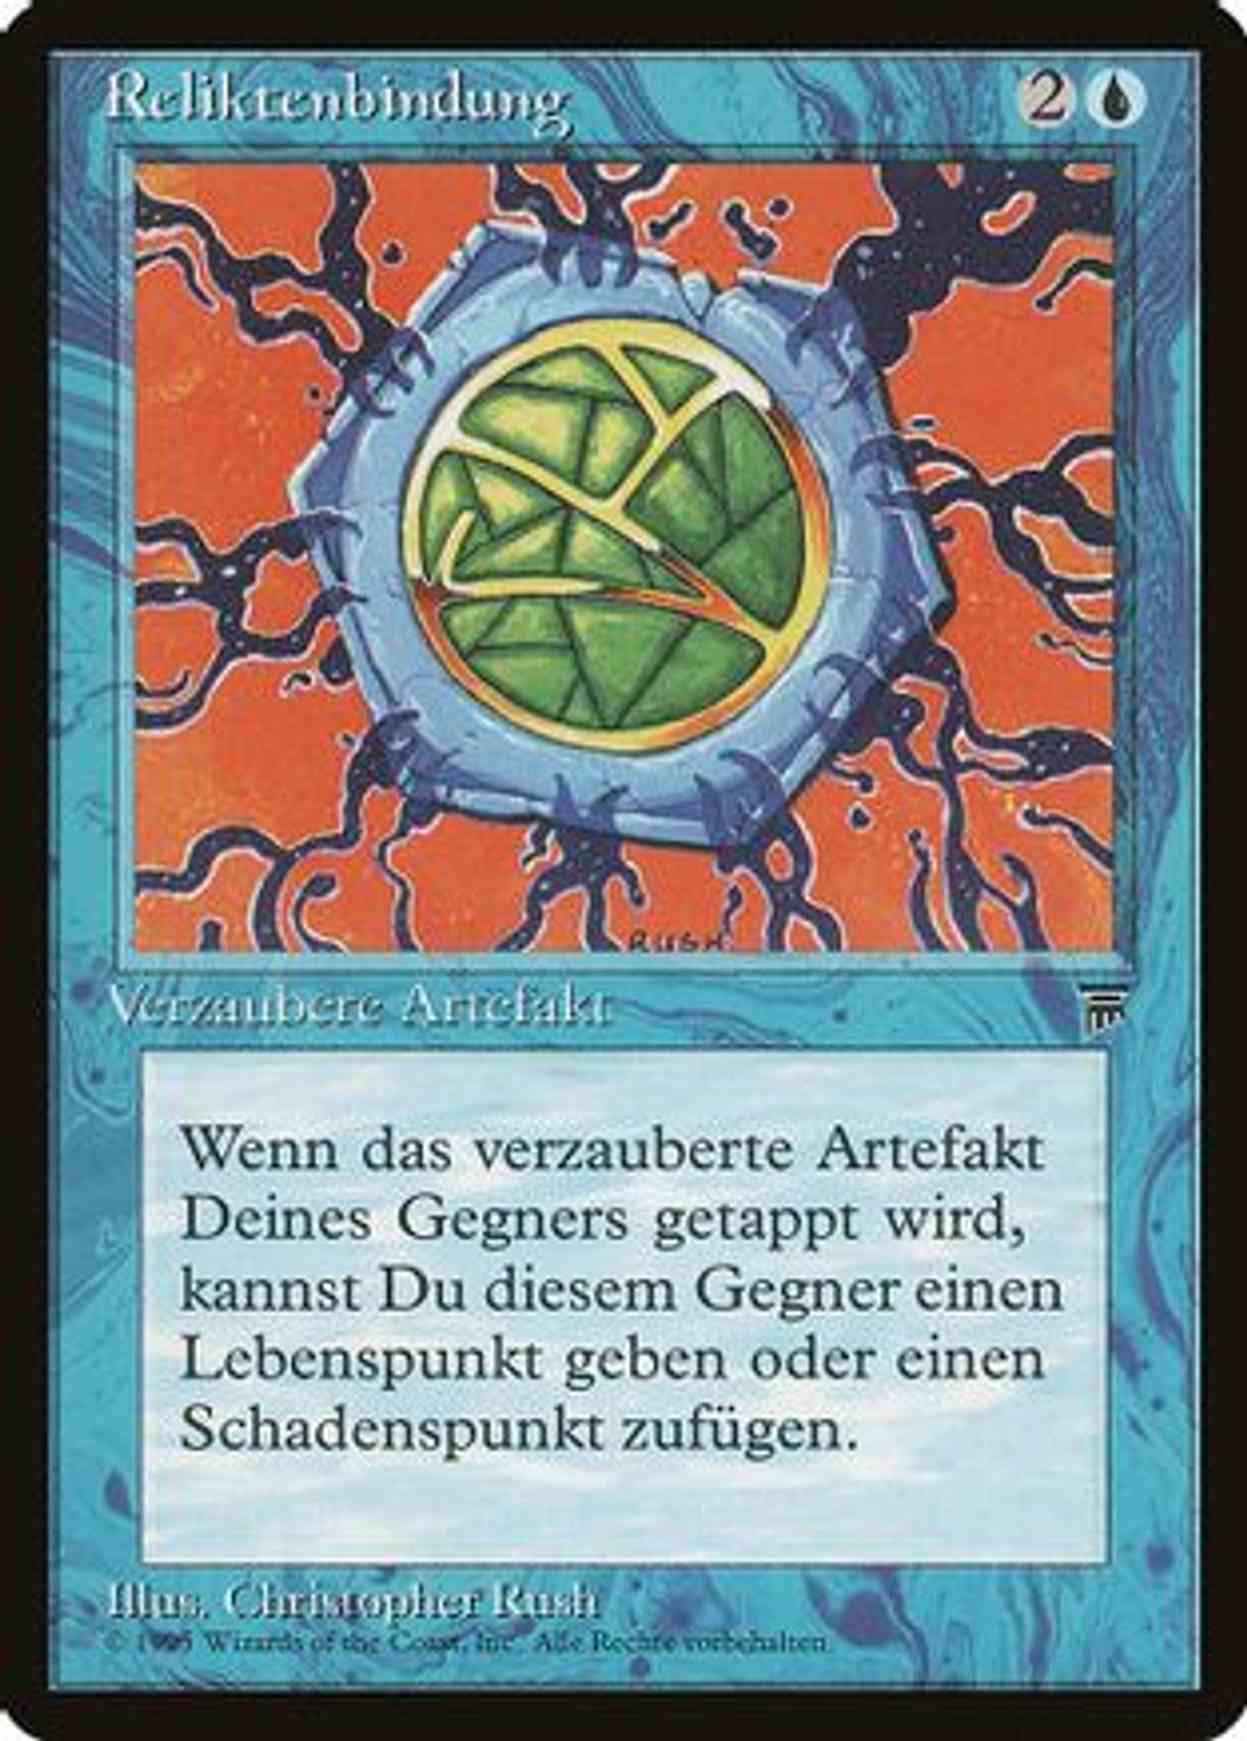 Relic Bind (German) - "Reliktenbindung" magic card front